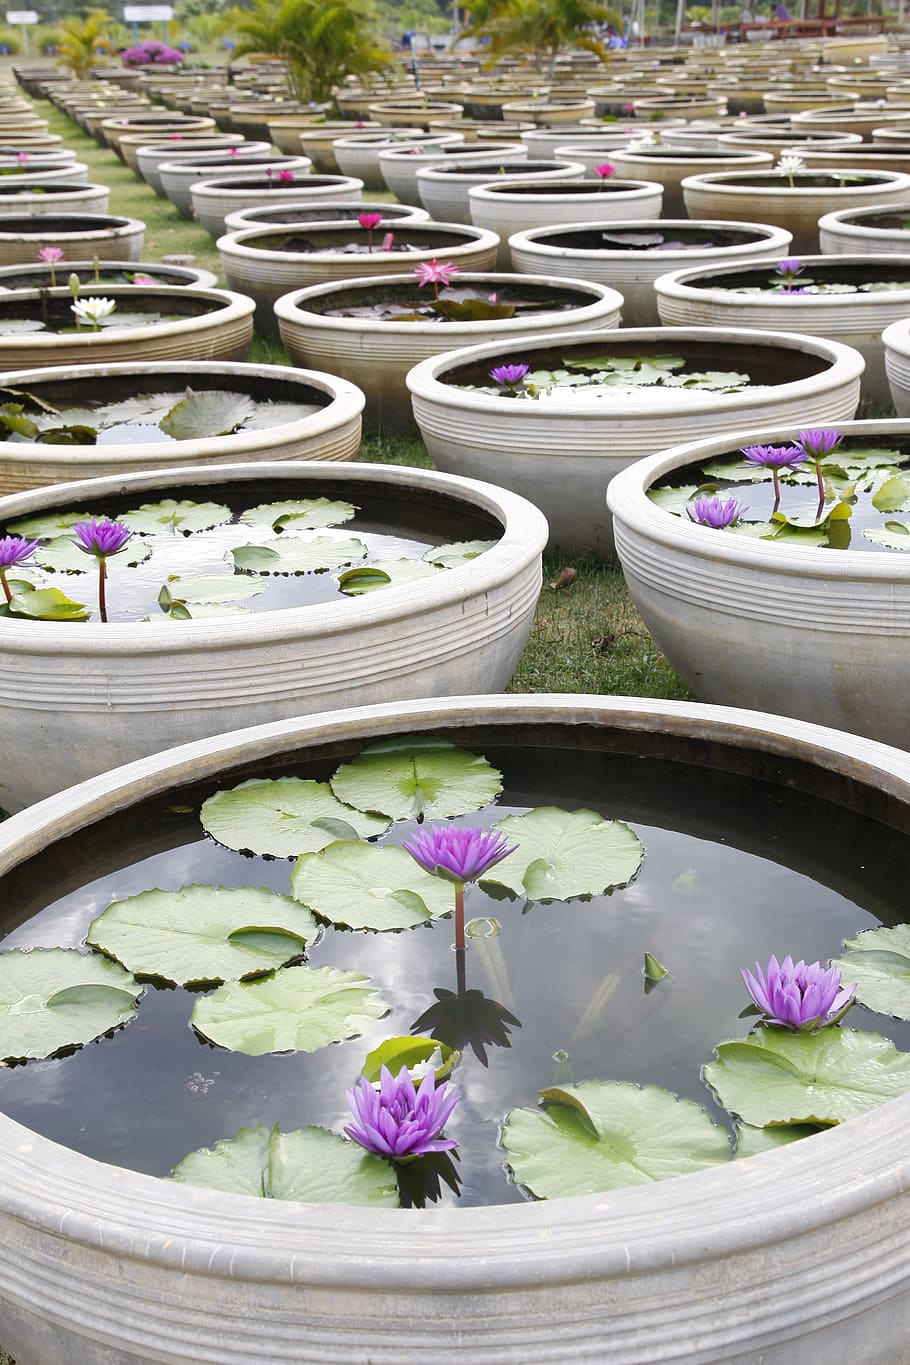 water lily, garden pond, ceramic, rajamangala, sung flower, thailand, flower, plant, flowering plant, nature